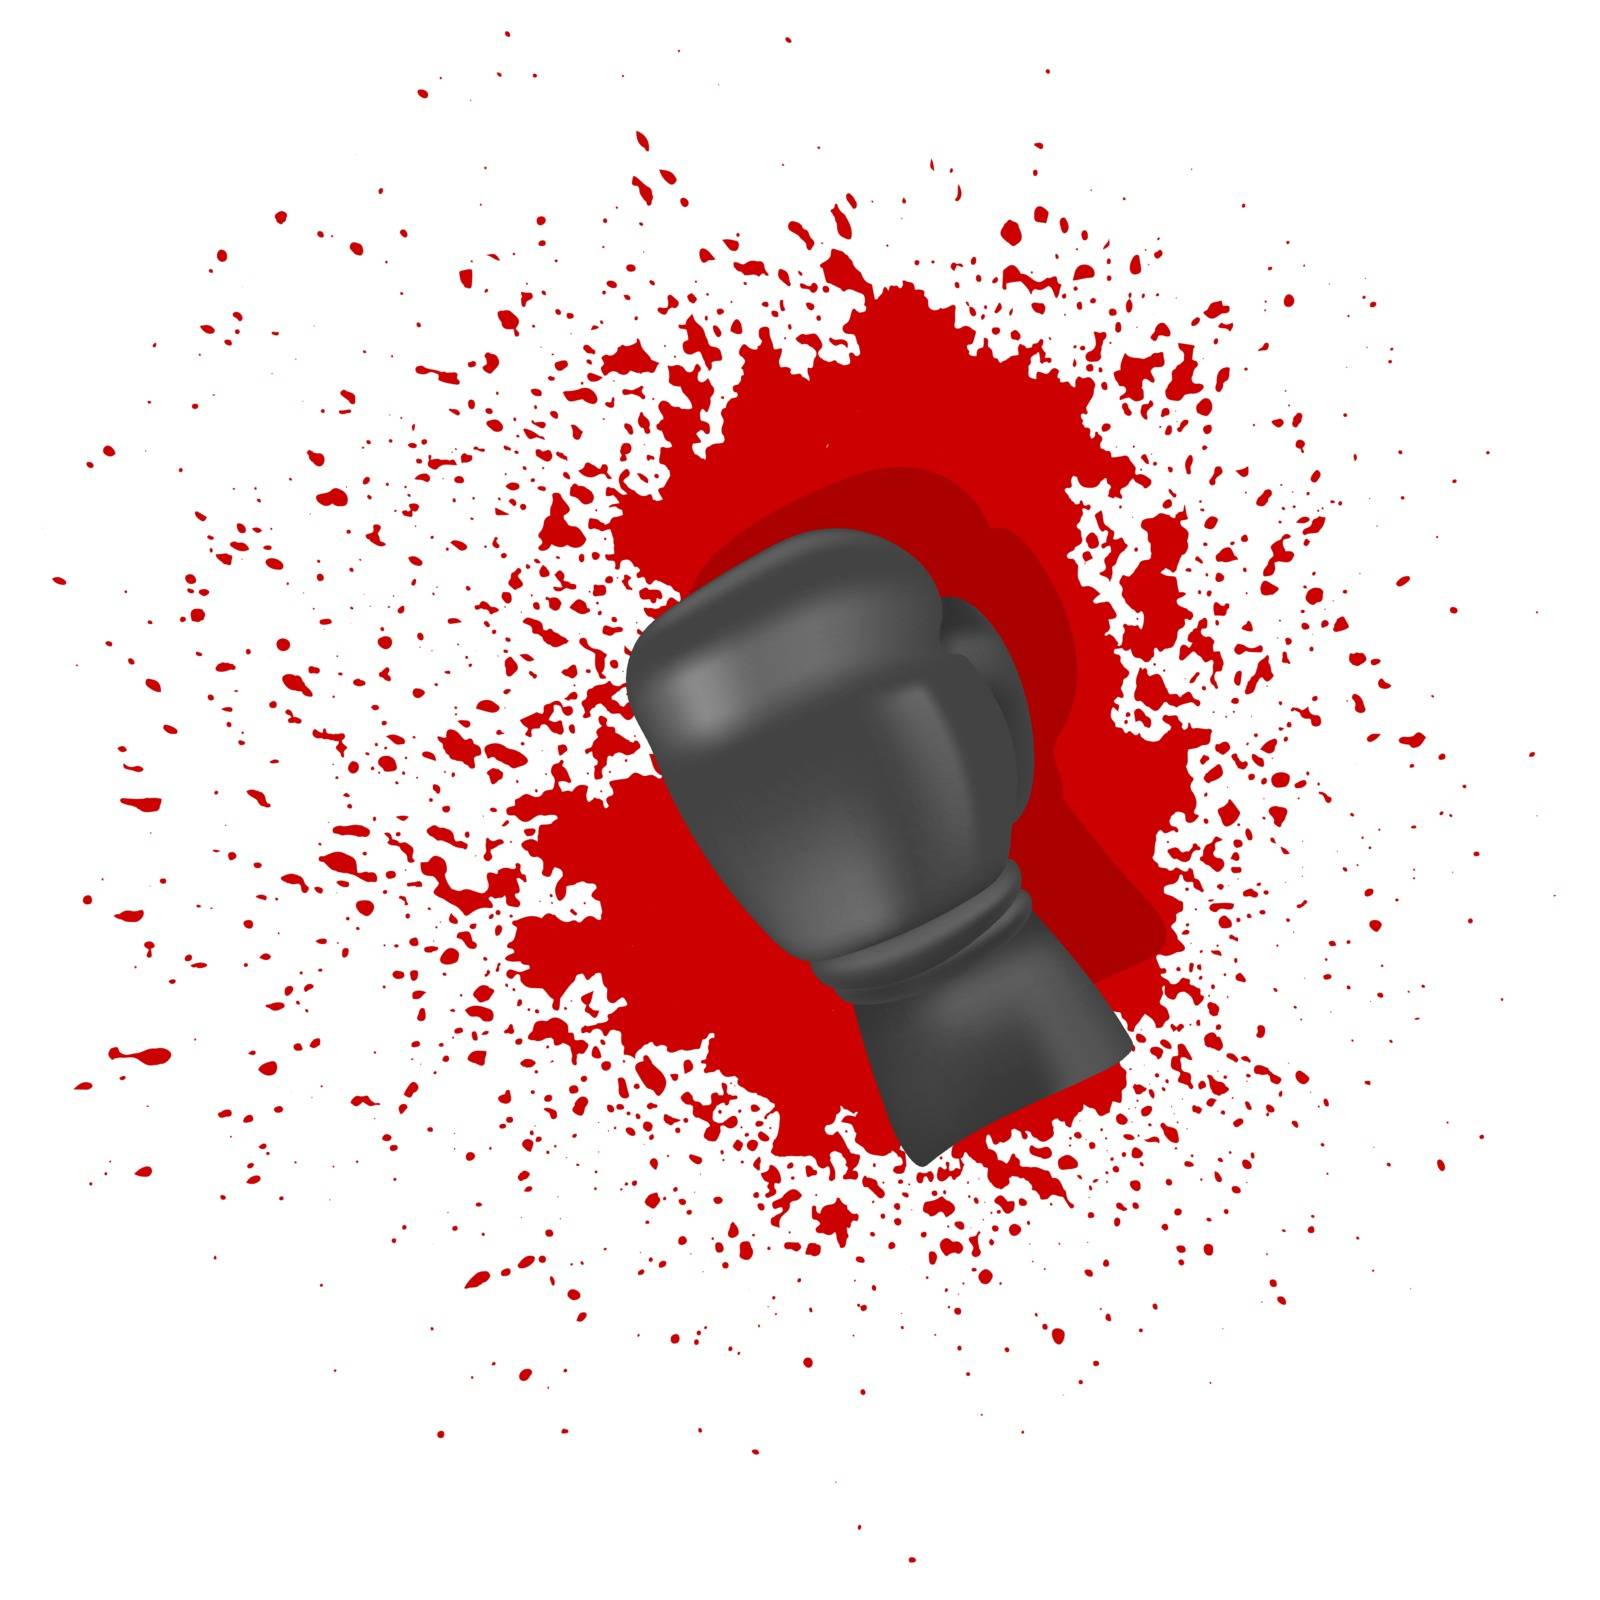 Single Boxing Glove on Blood Splatters Background